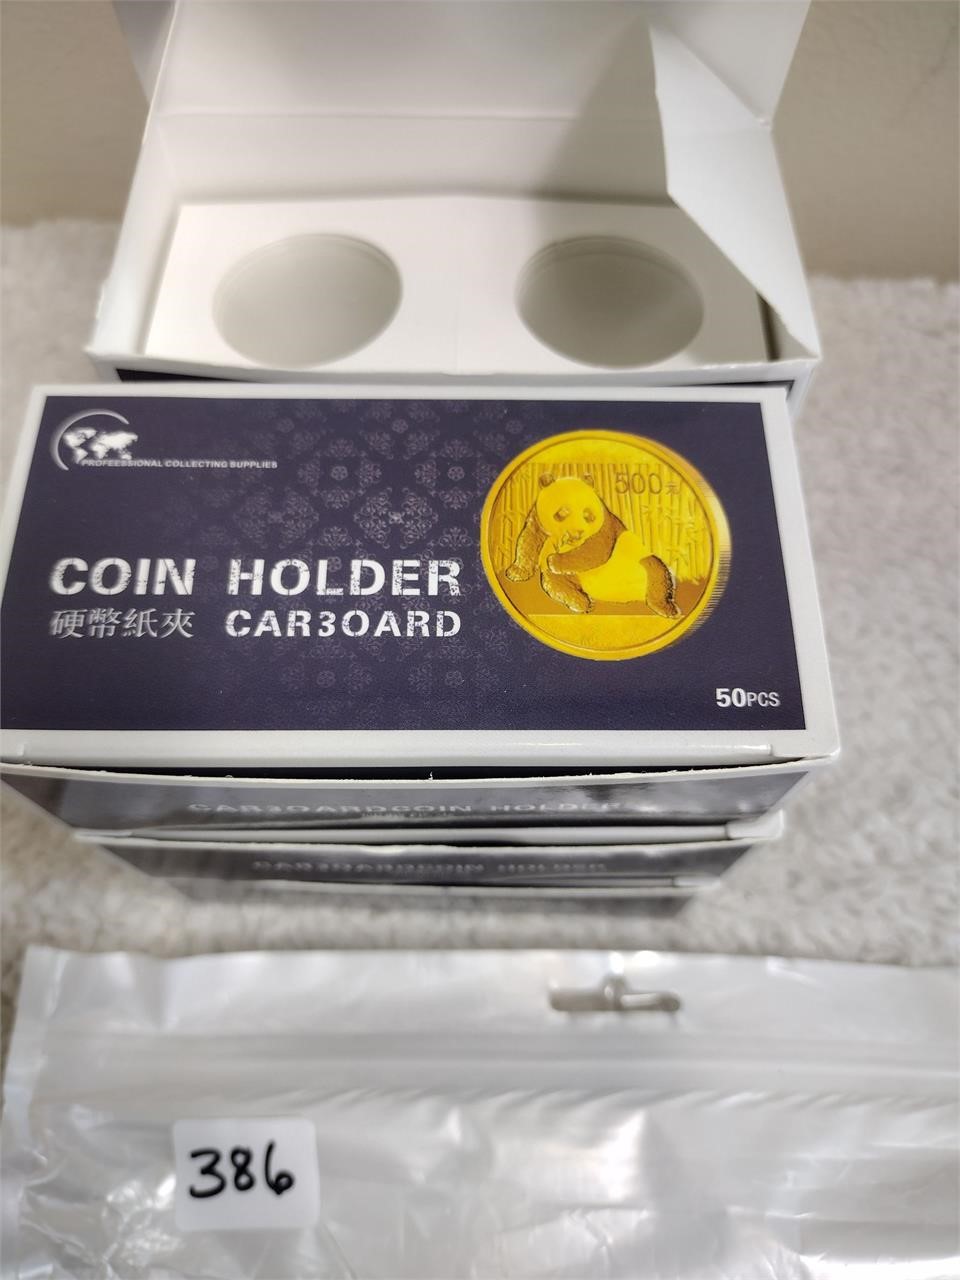 Coin Holders Cardboard